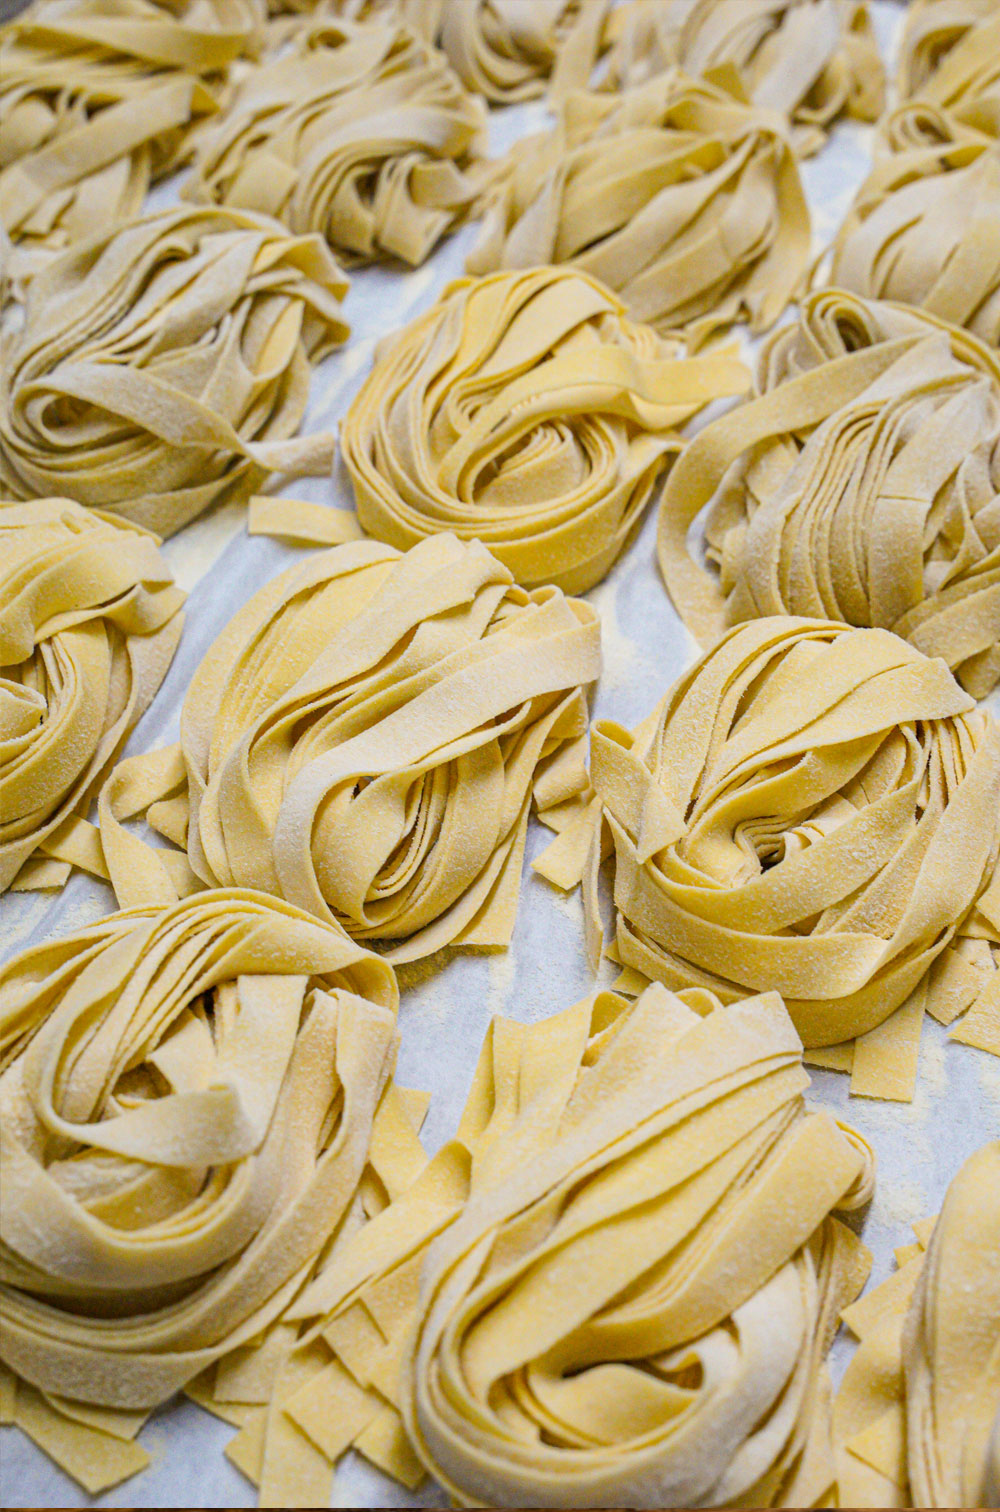 bunches freshly-made uncooked pasta on sheet pan at da laposta